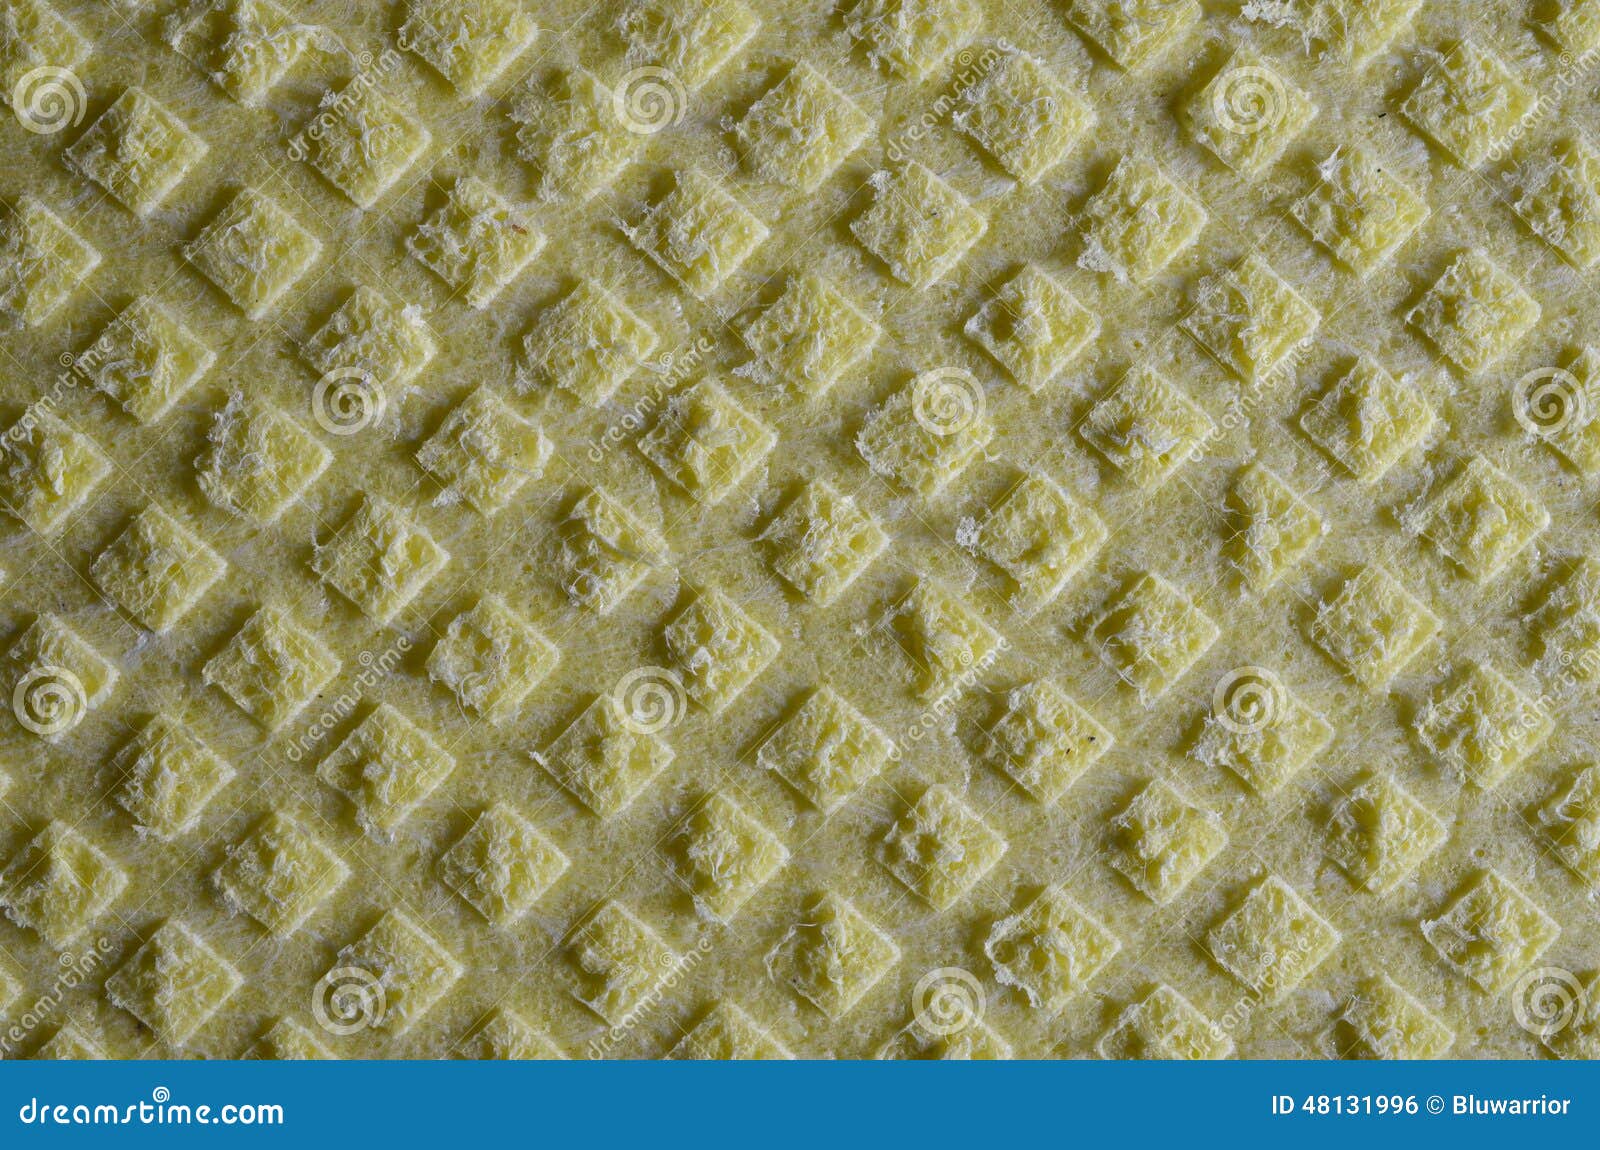 Sponge cloth stock photo. Image of fibre, squares, detail - 48131996